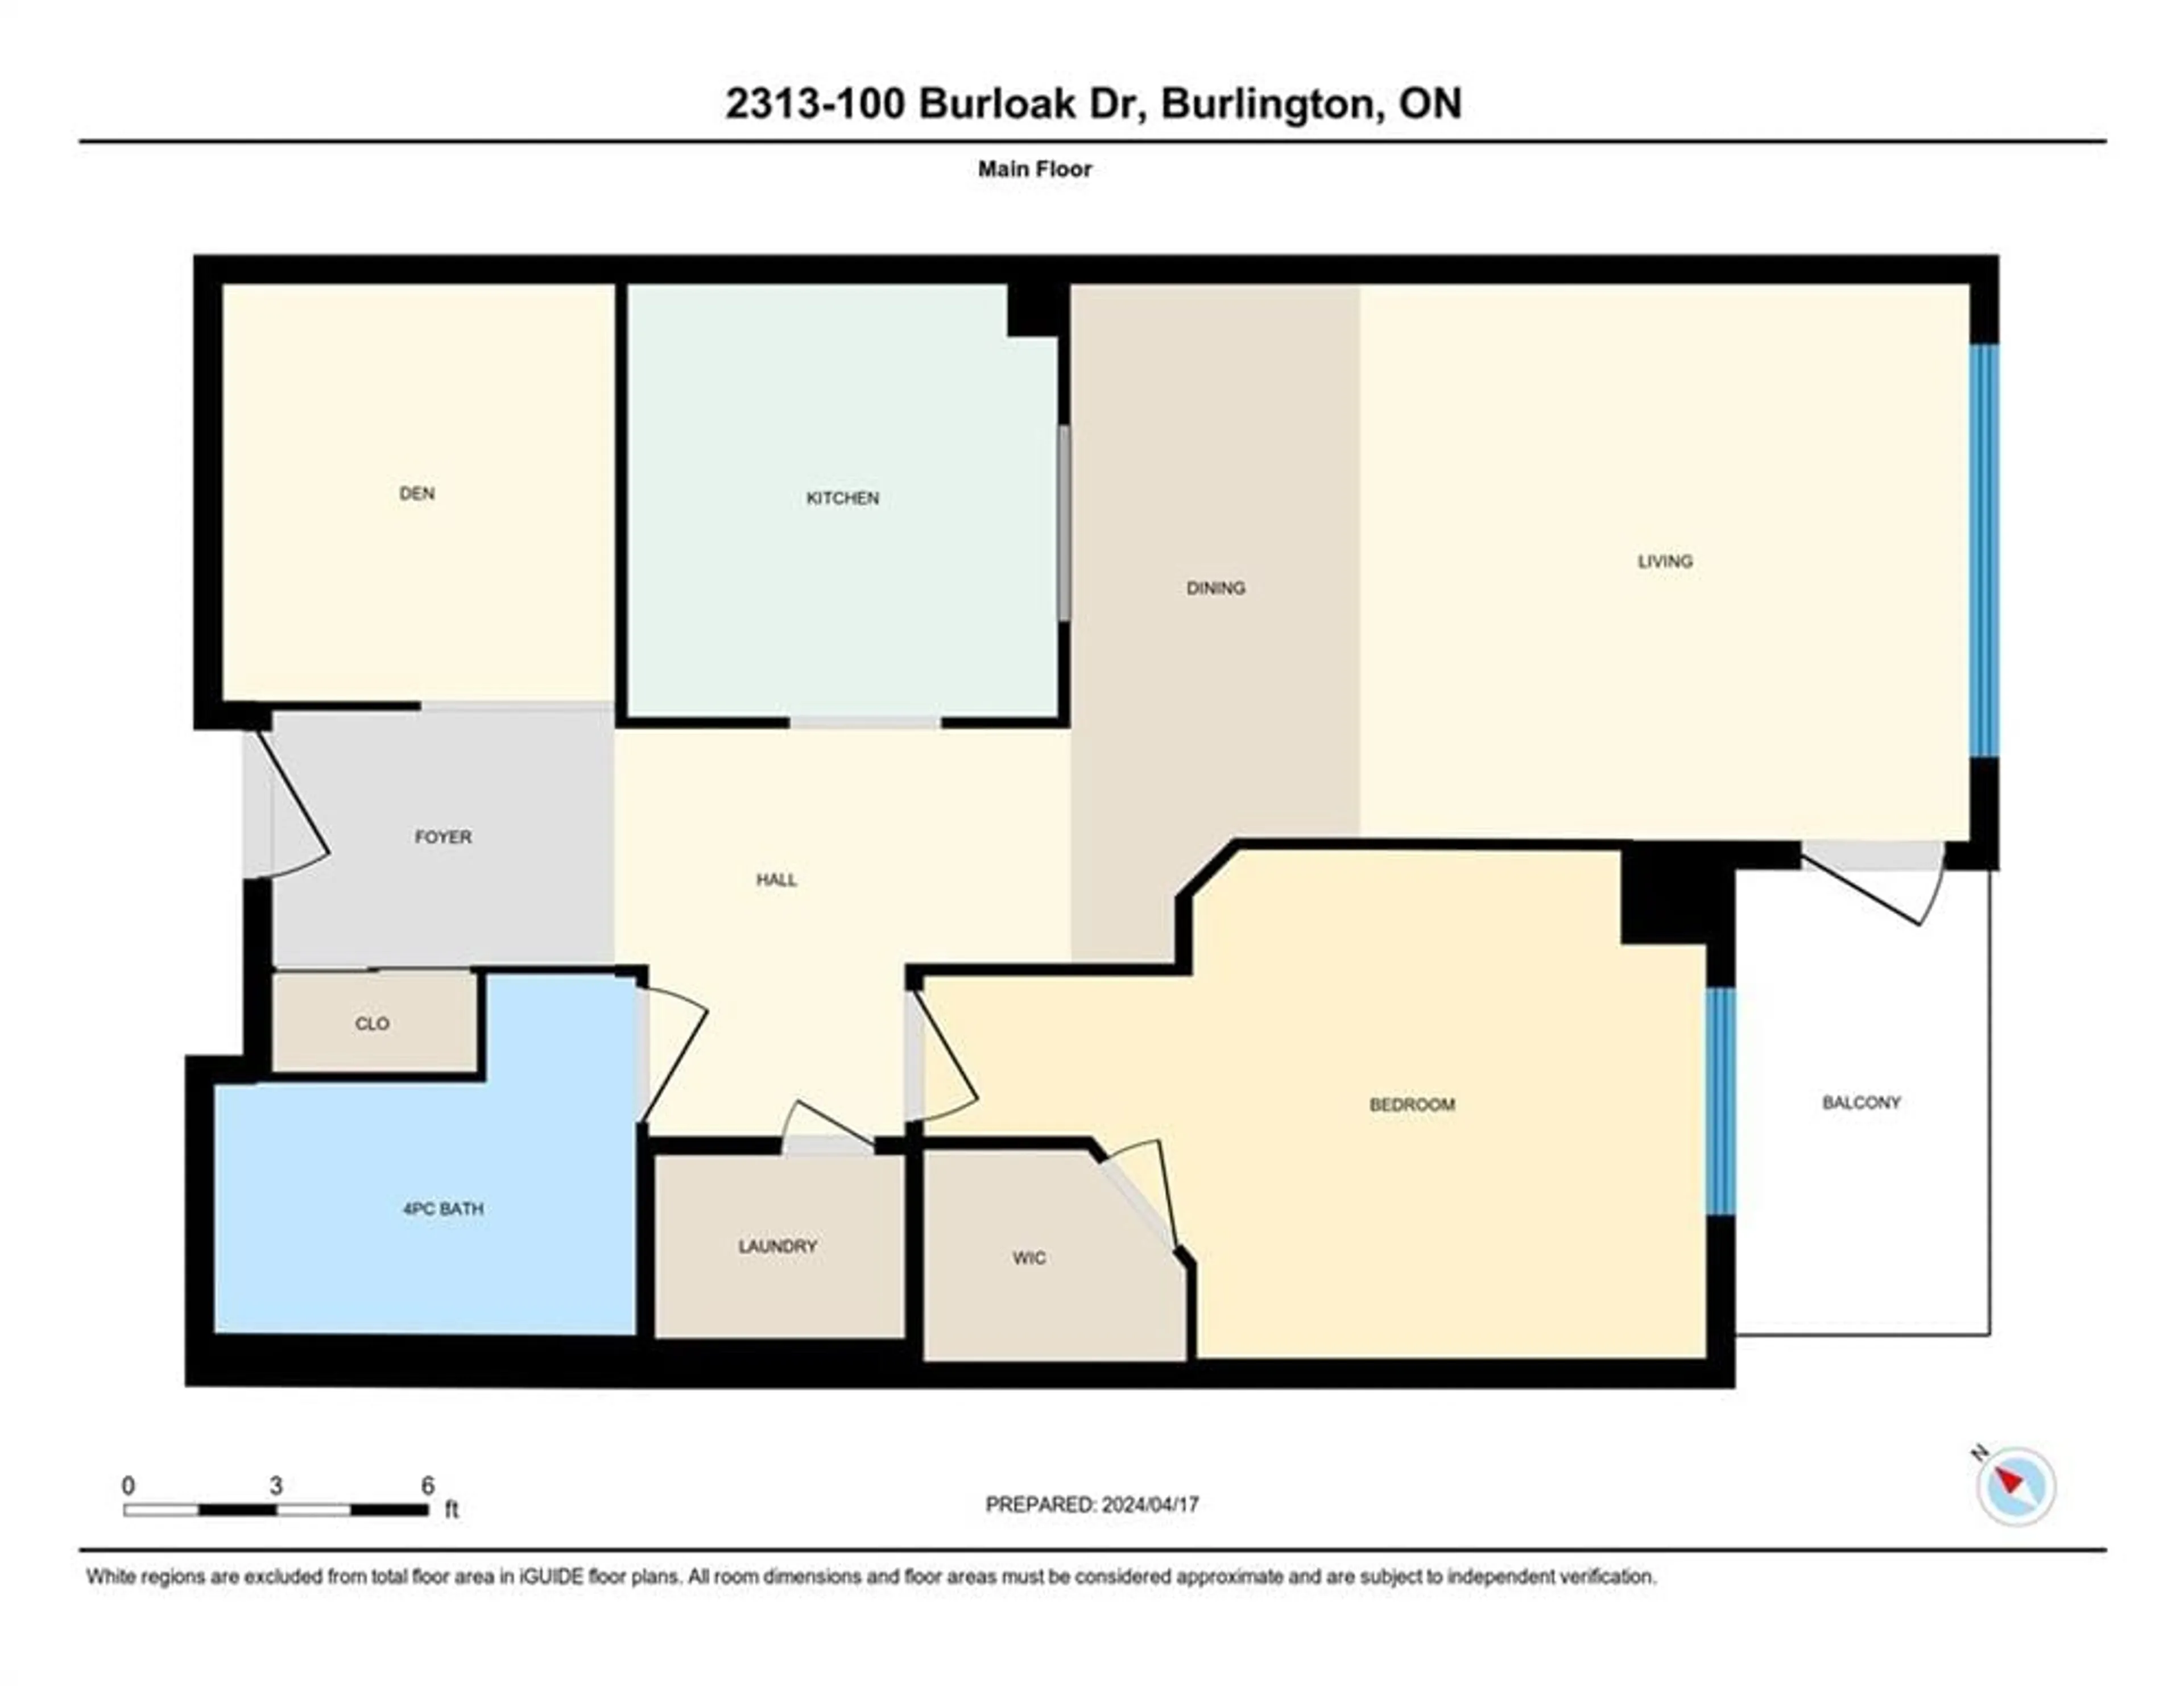 Floor plan for 100 Burloak Dr #2313, Burlington Ontario L7L 6P6